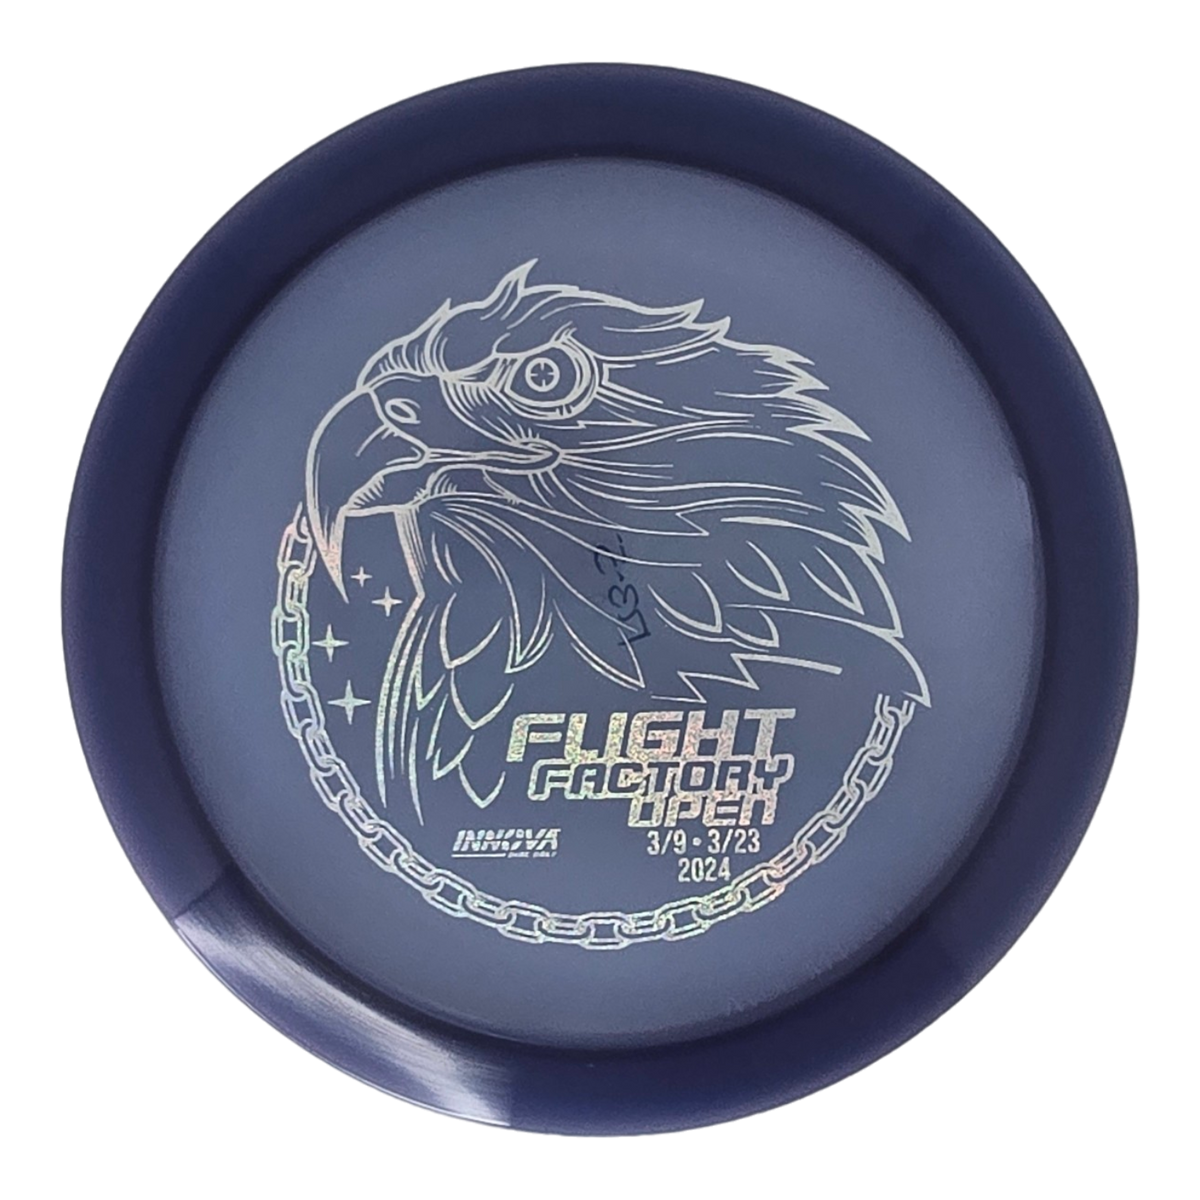 Innova Champion Firebird - Flight Factory Open (2024)